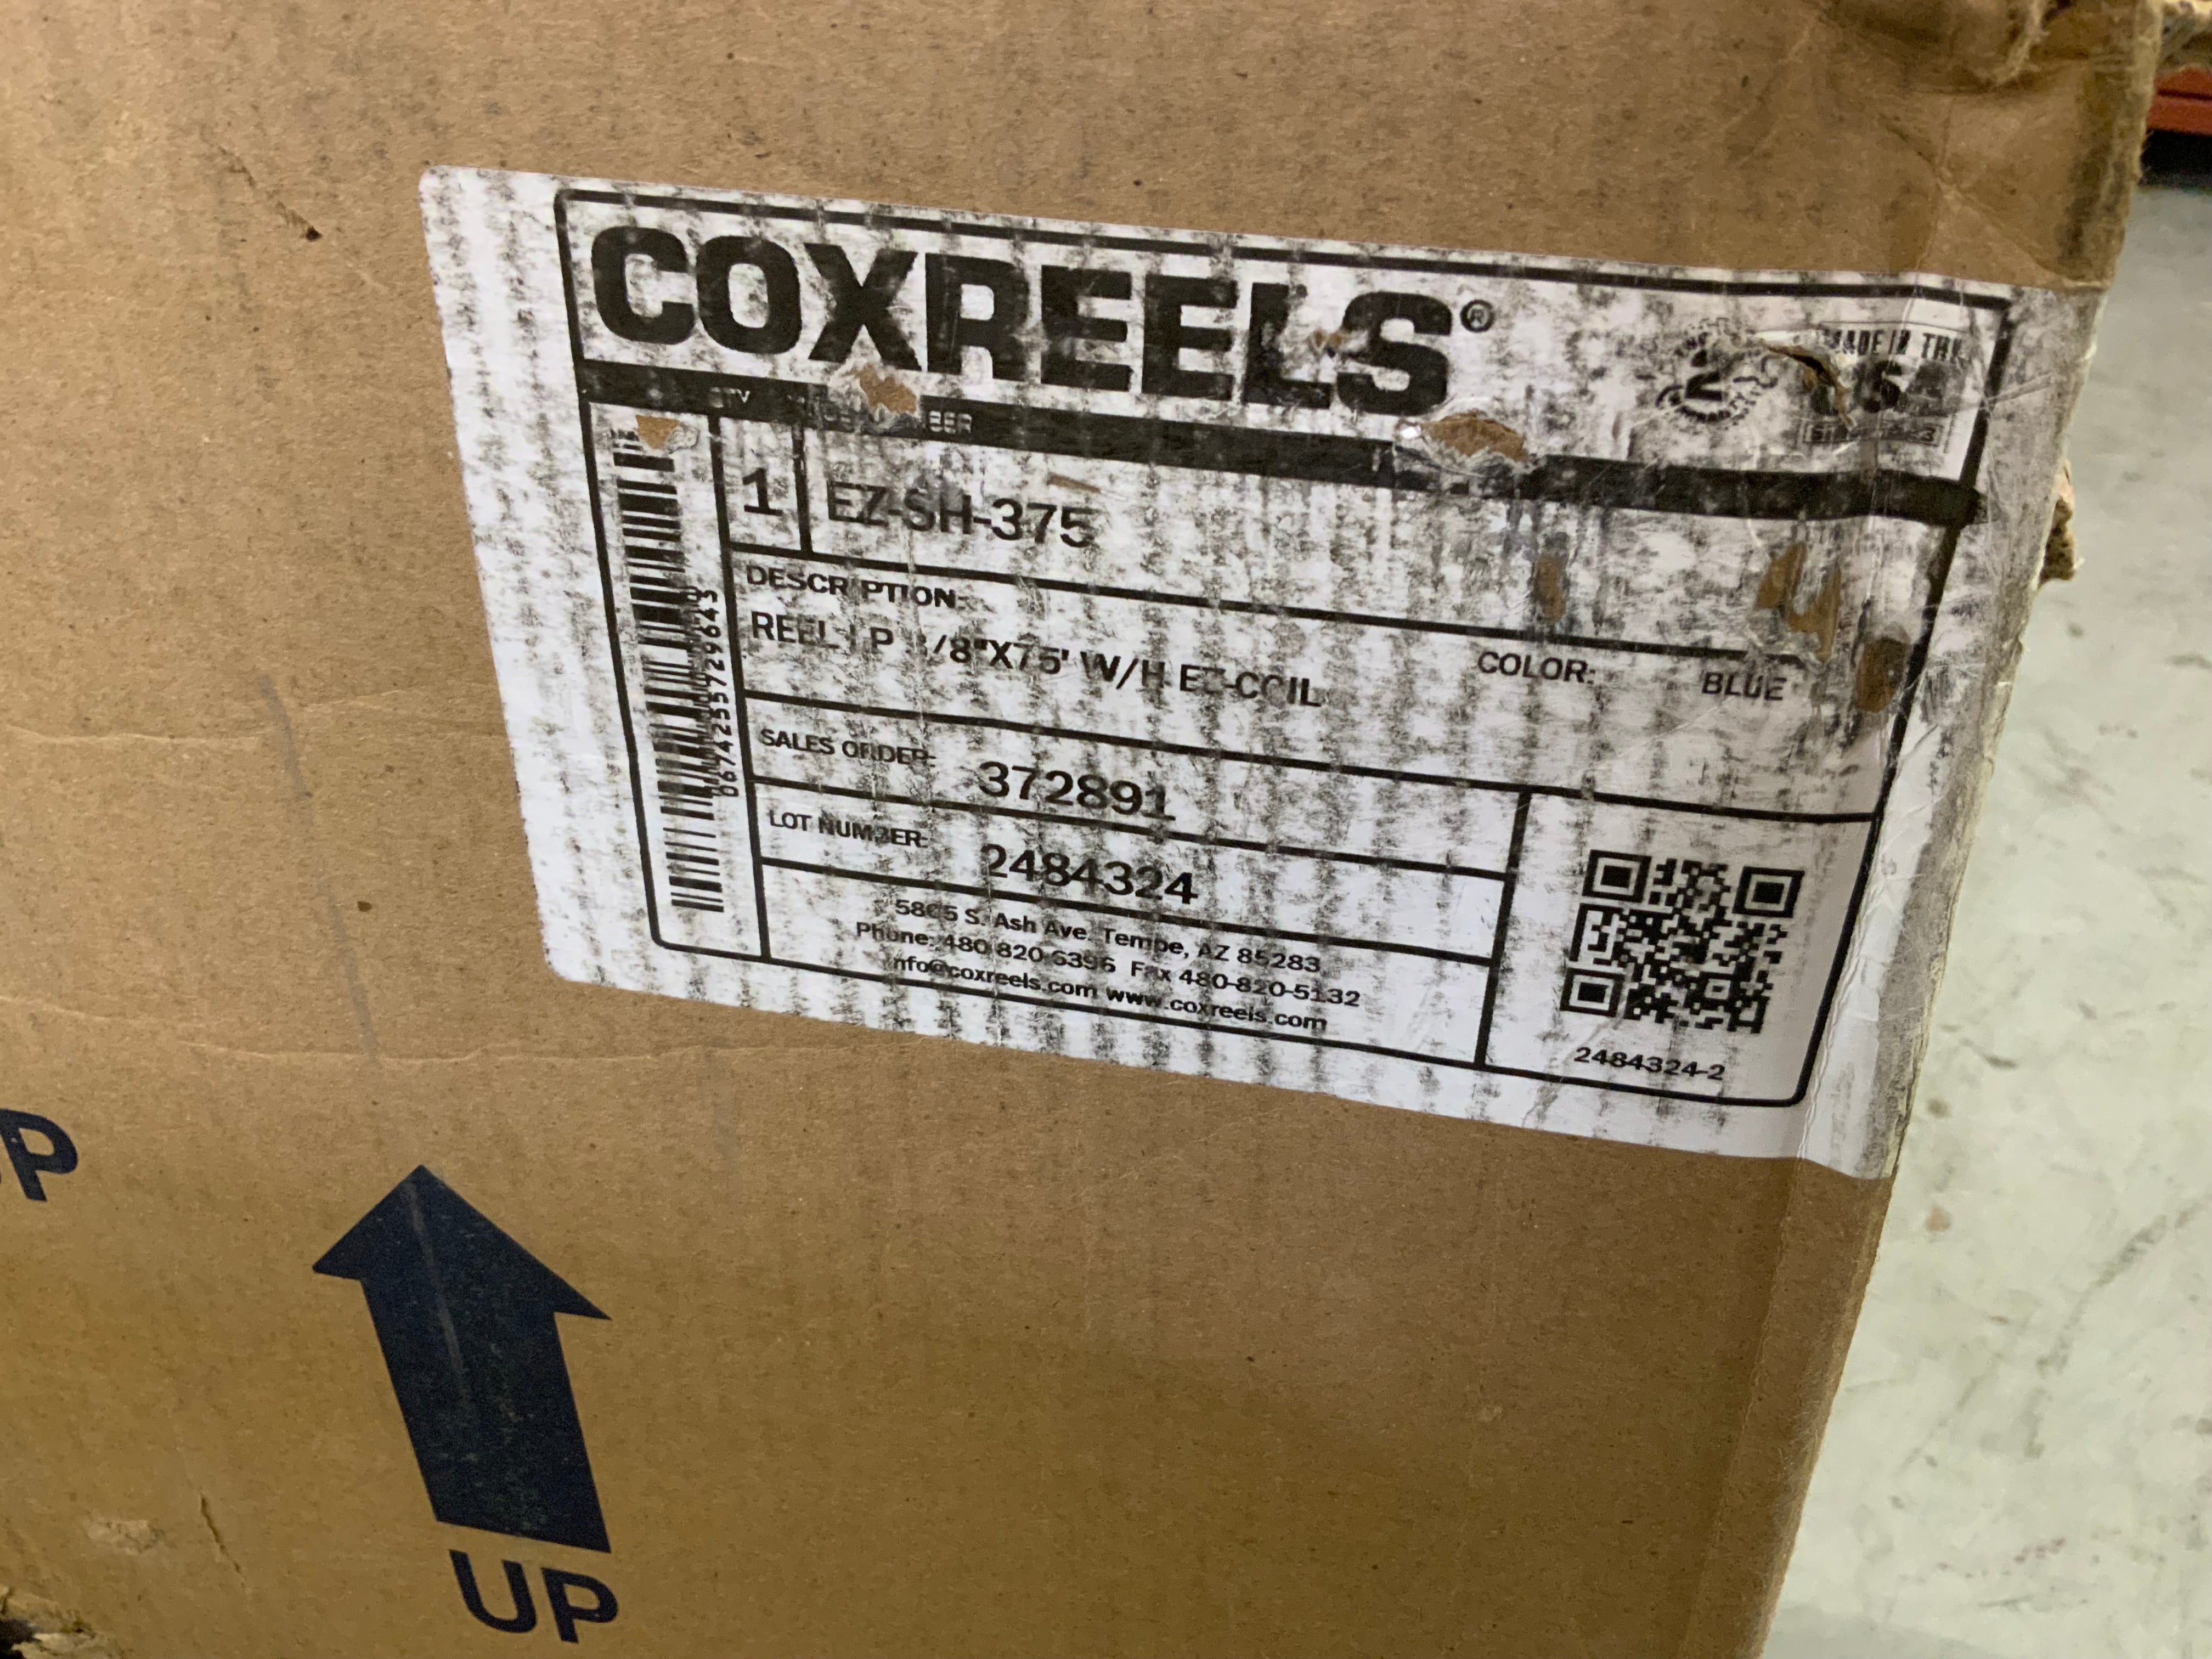 Coxreels EZ-SH-375 Safety Series Super Hub Spring Rewind Reel with Hose (8183548412142)